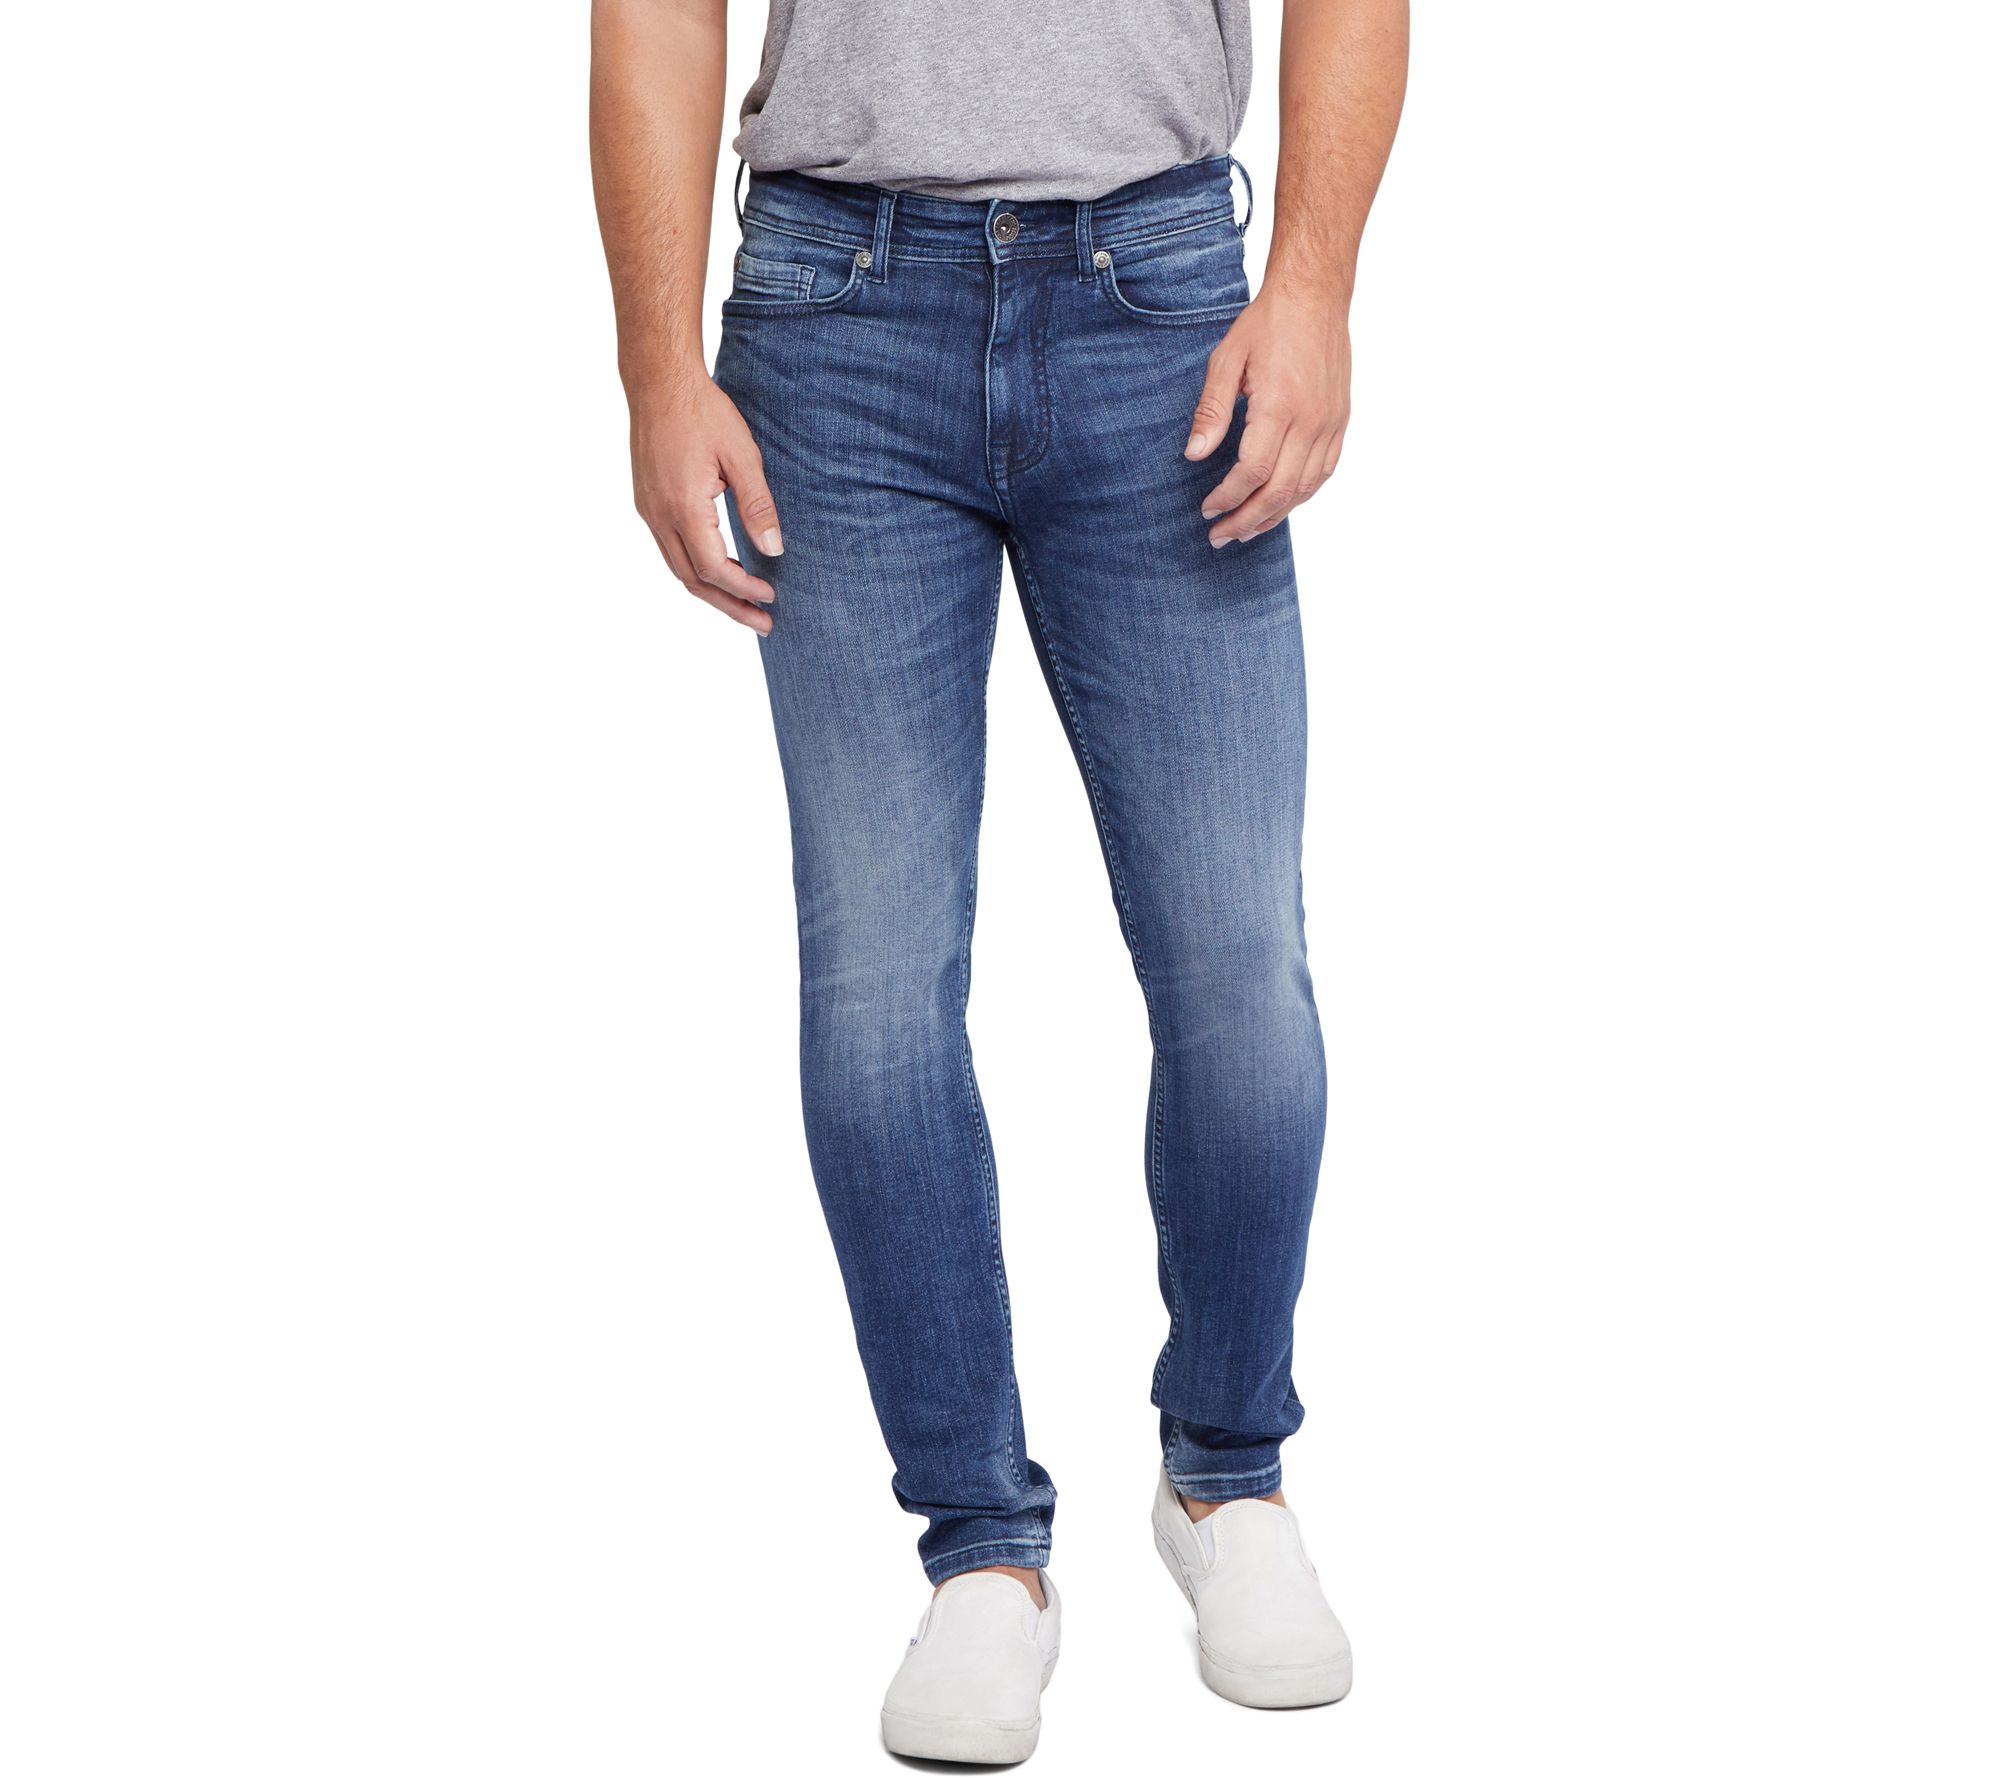 Seven7 Mens Super Slim 5 Pocket Jean in Belmore Wash - QVC.com